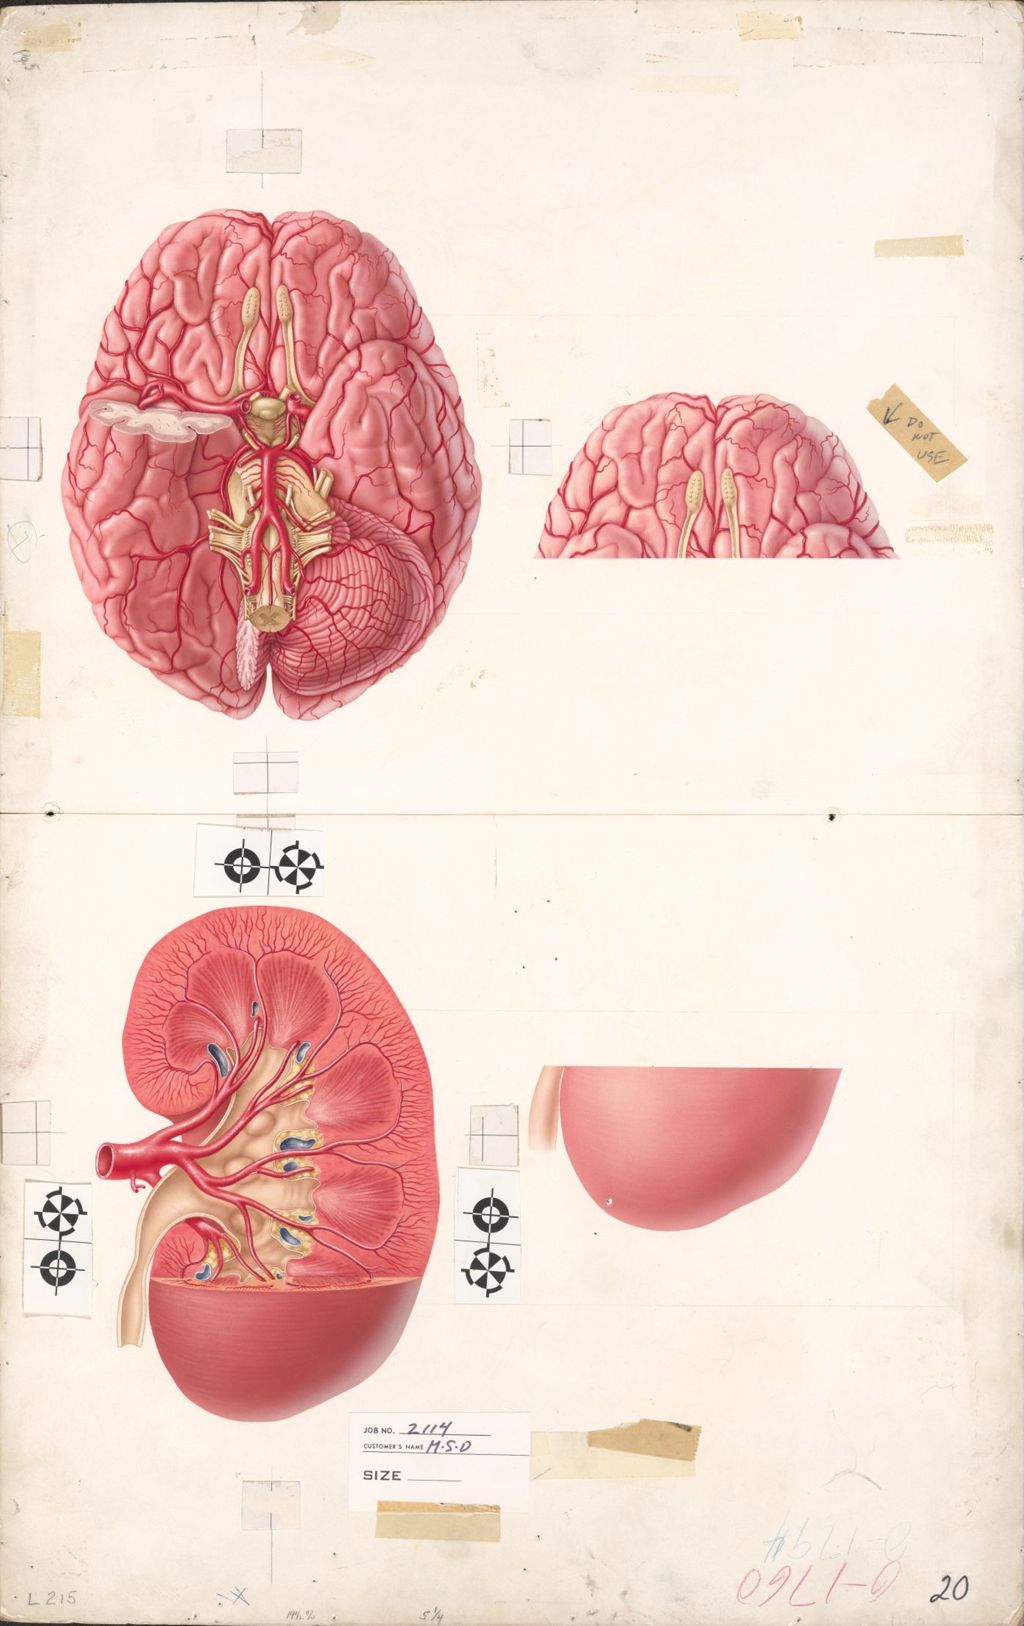 Miniature of Medical Profiles, Aldomet, Blood flow to vital organs in hypotension, Plate 2